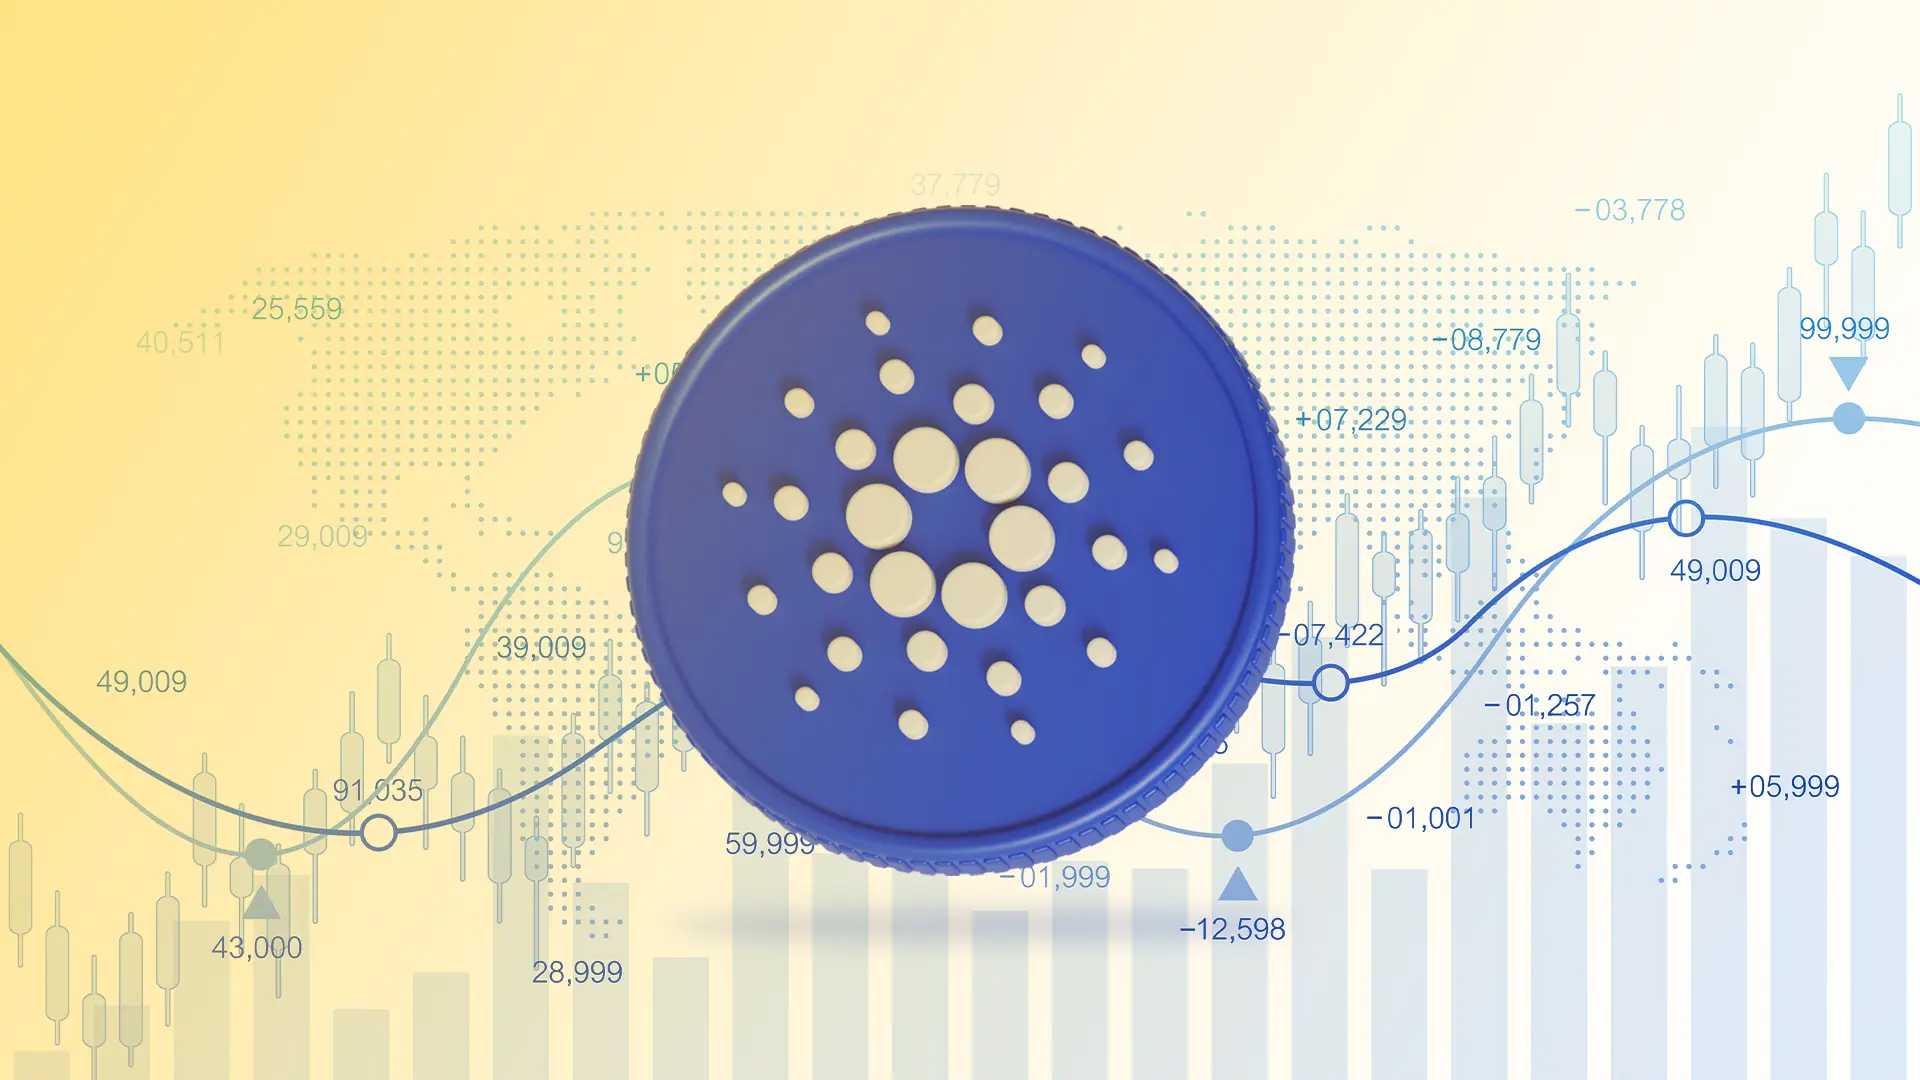 Cardano Price Prediction - ADA Coin Price Prediction for | bitcoinhelp.fun